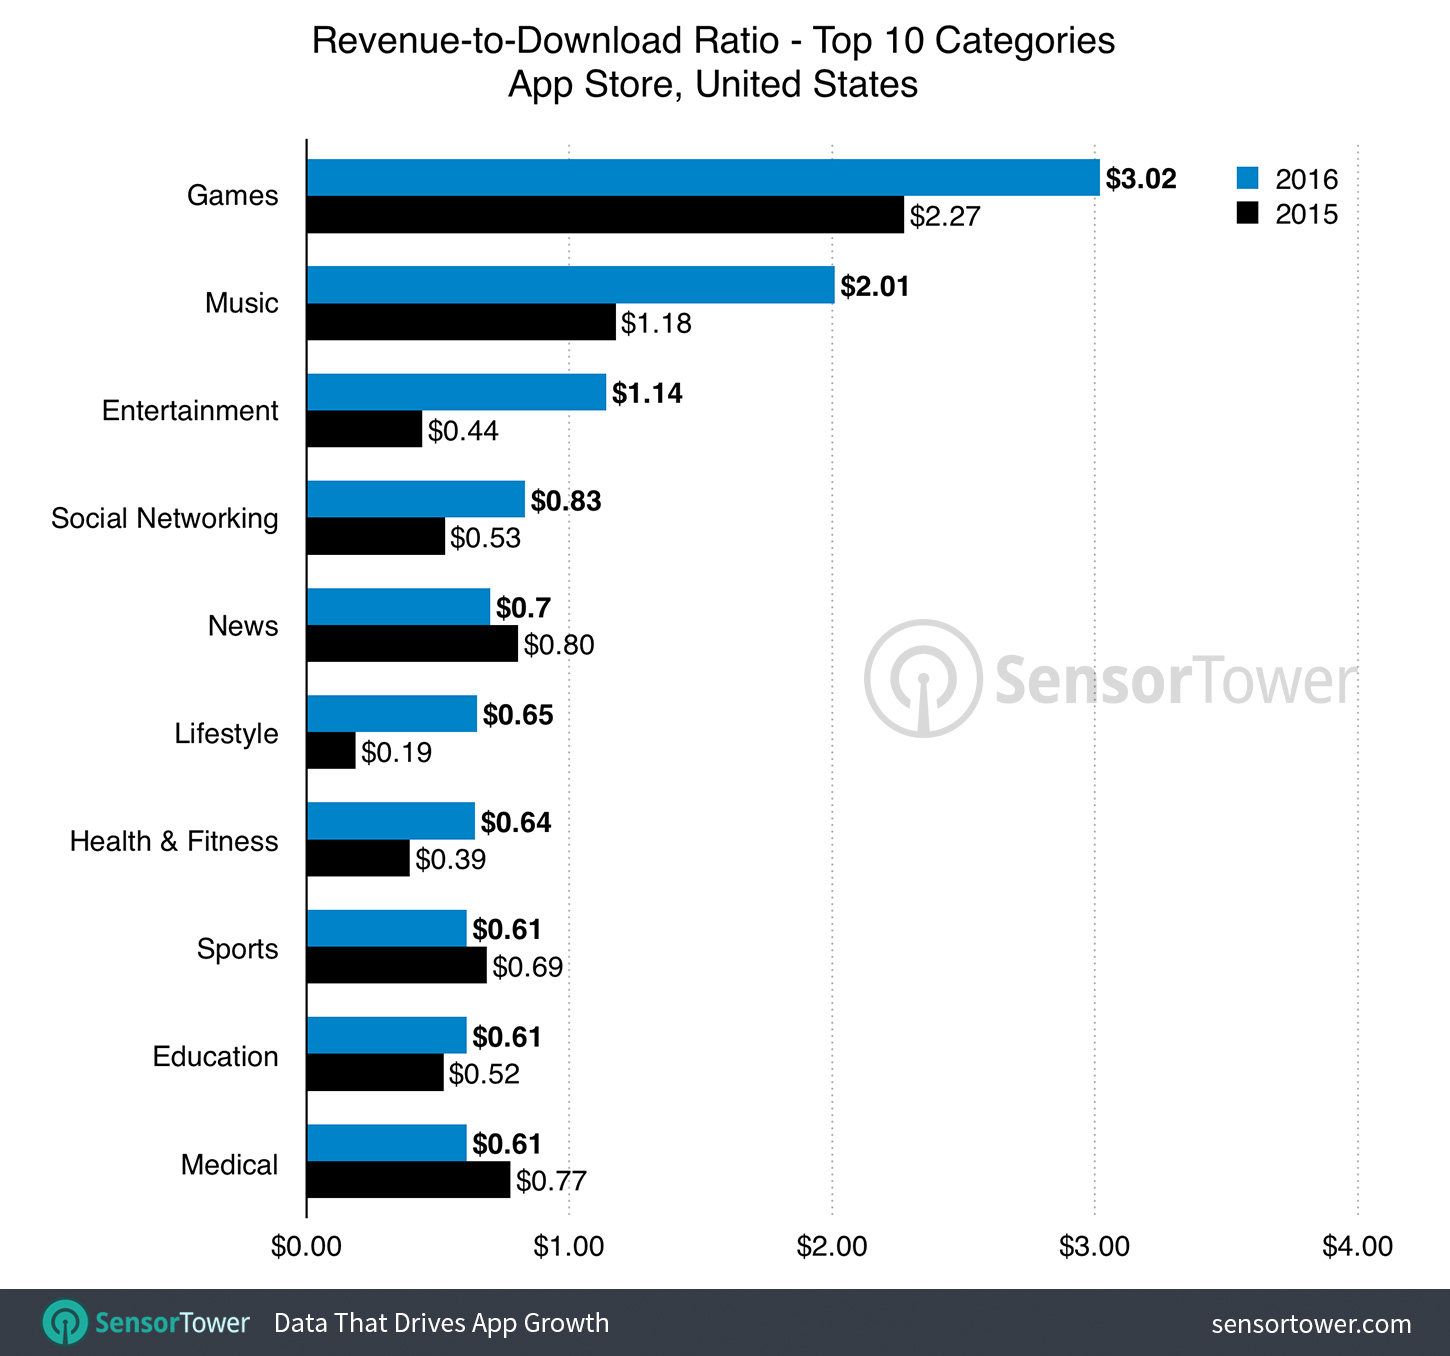 U.S. App Store top 10 categories by gross revenue per download in 2016